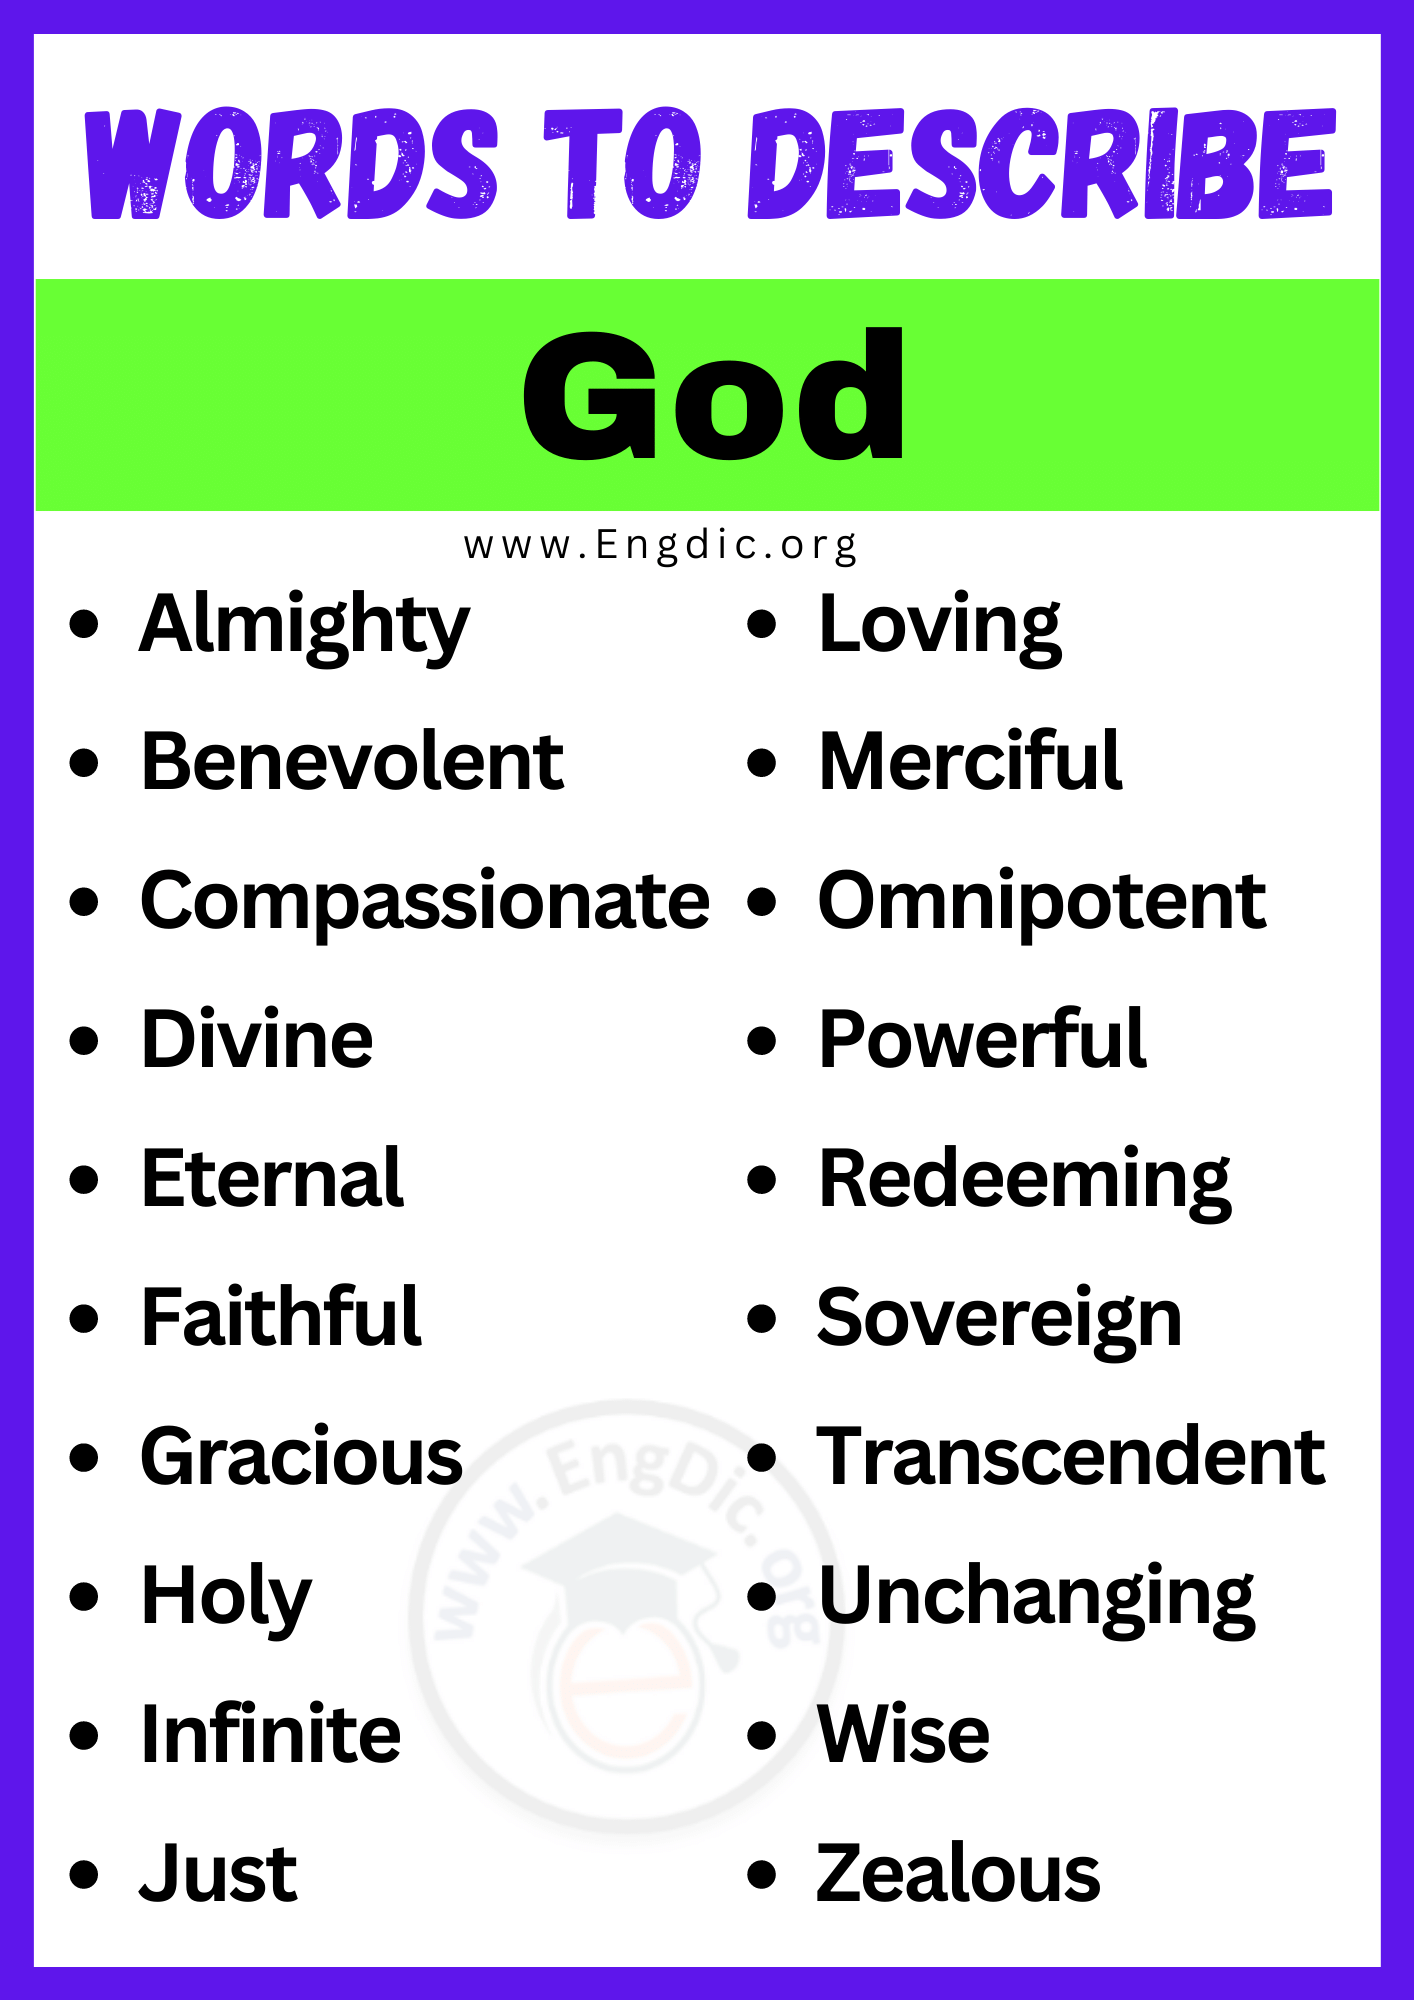 Words to Describe God